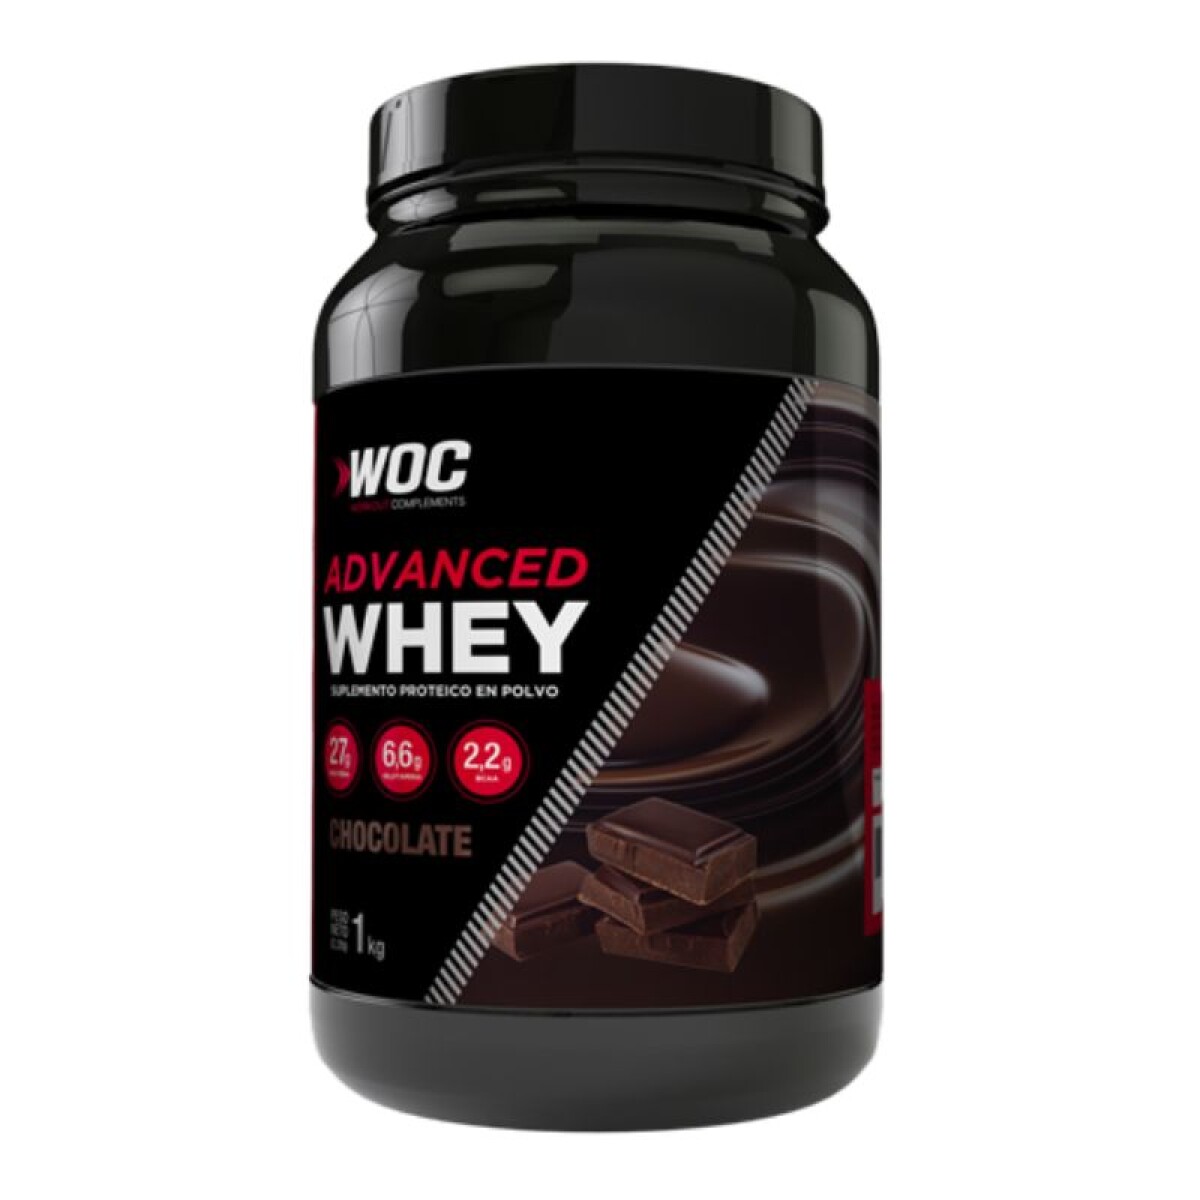 Whey Advanced WOC 1 Kg - Chocolate 